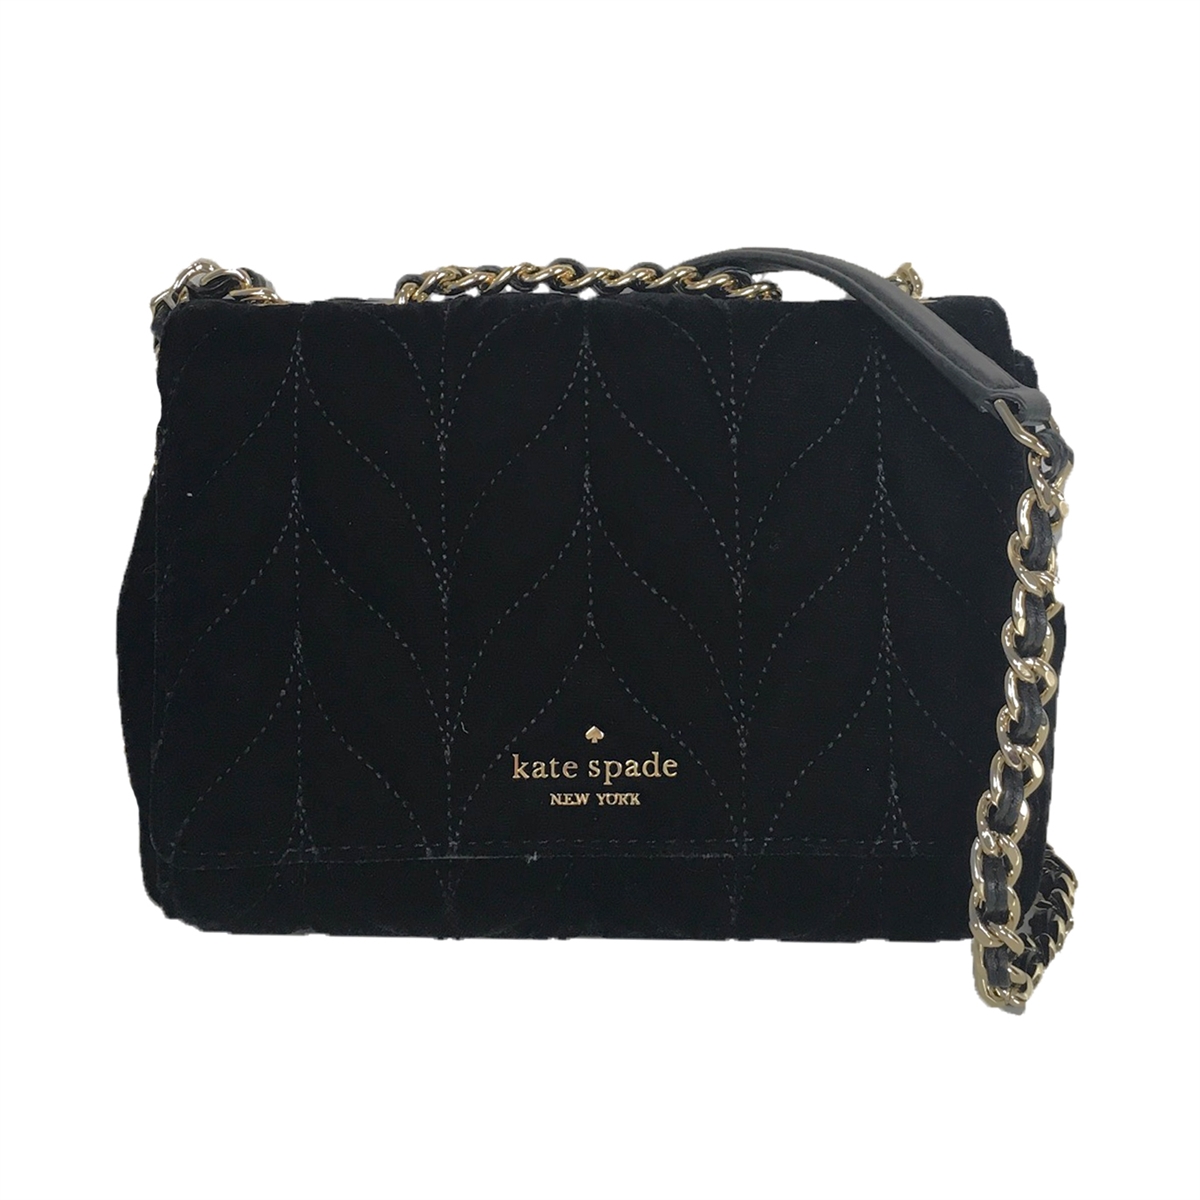 KATE SPADE LAUREL Way Reiley Black Velvet W/Pearls Handbag Purse & Match  Wallet $71.00 - PicClick